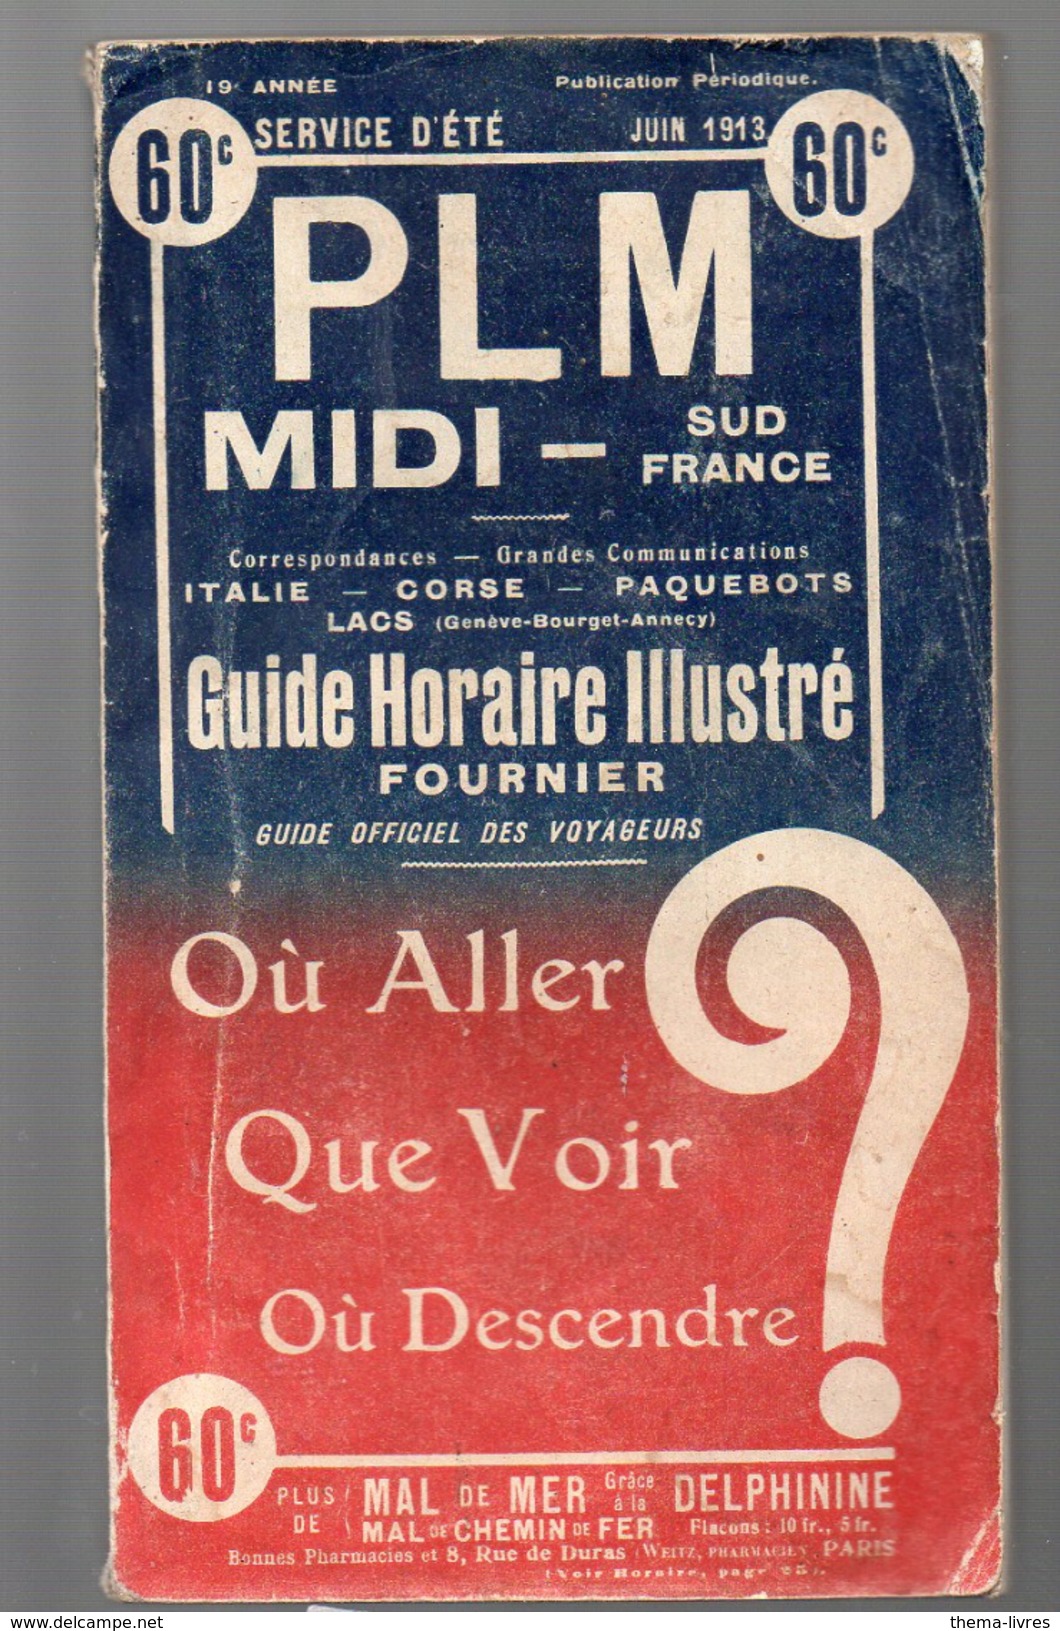 Guide Horaire Illustré Fournier : PLM MIDI FRANCE Juin 1913 (PPP4672) - Europe